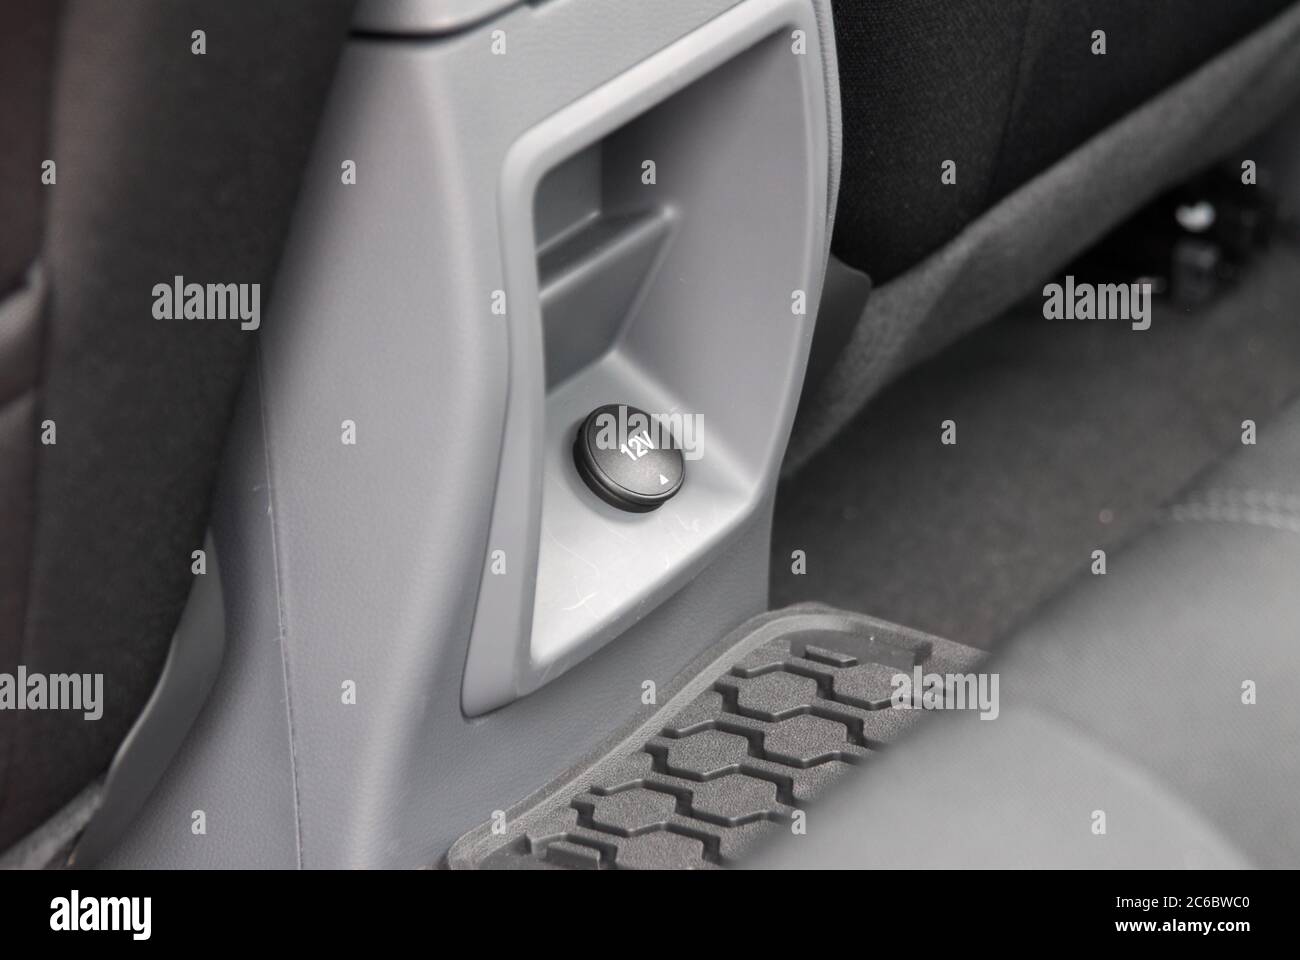 Steckdose und usb-Anschluss im Auto Stockfotografie - Alamy